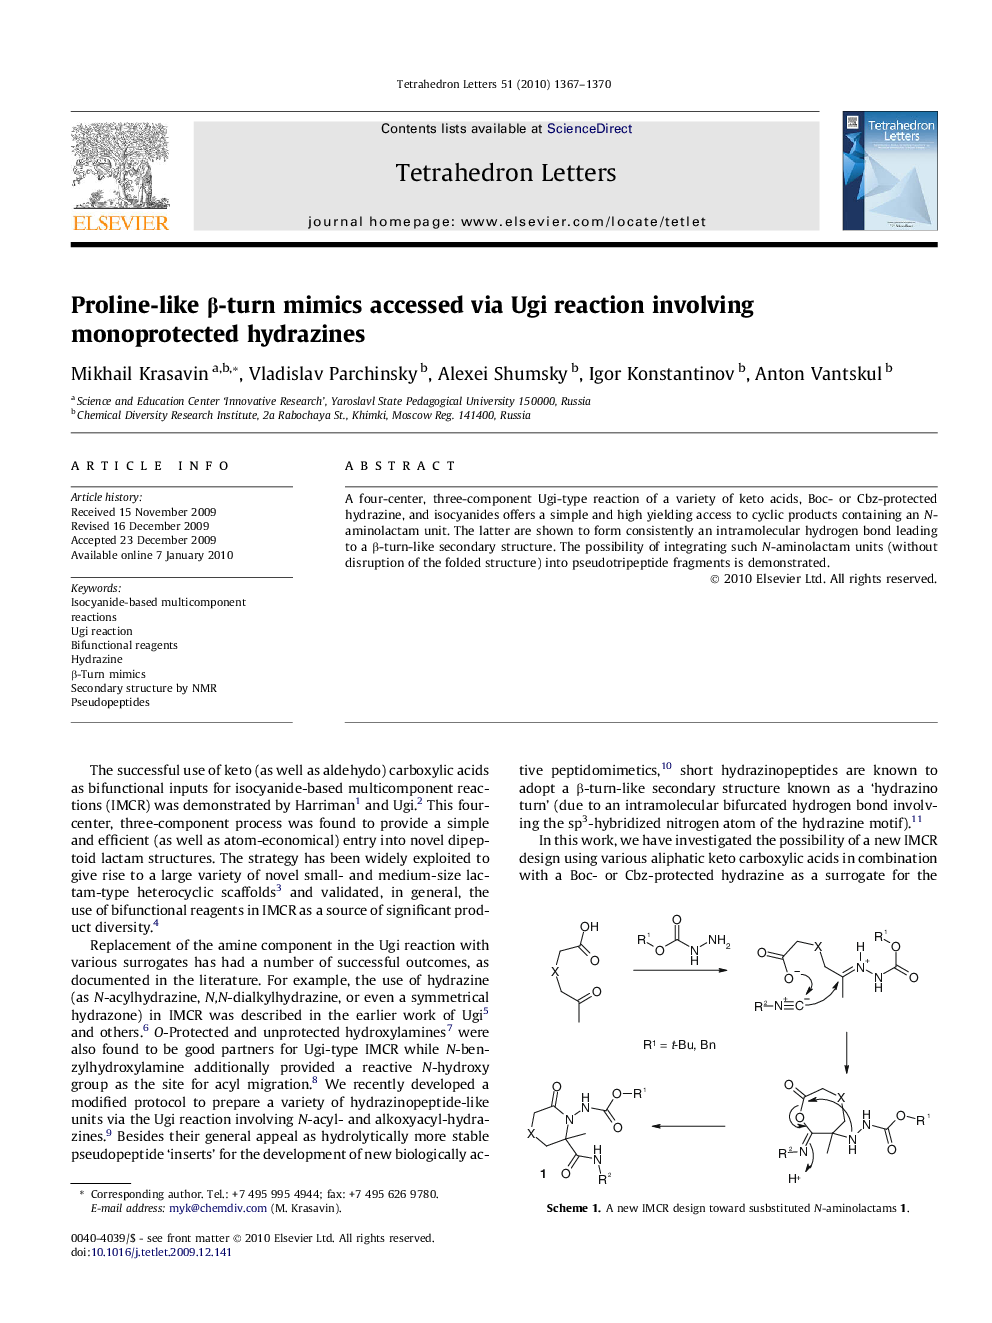 Proline-like Î²-turn mimics accessed via Ugi reaction involving monoprotected hydrazines